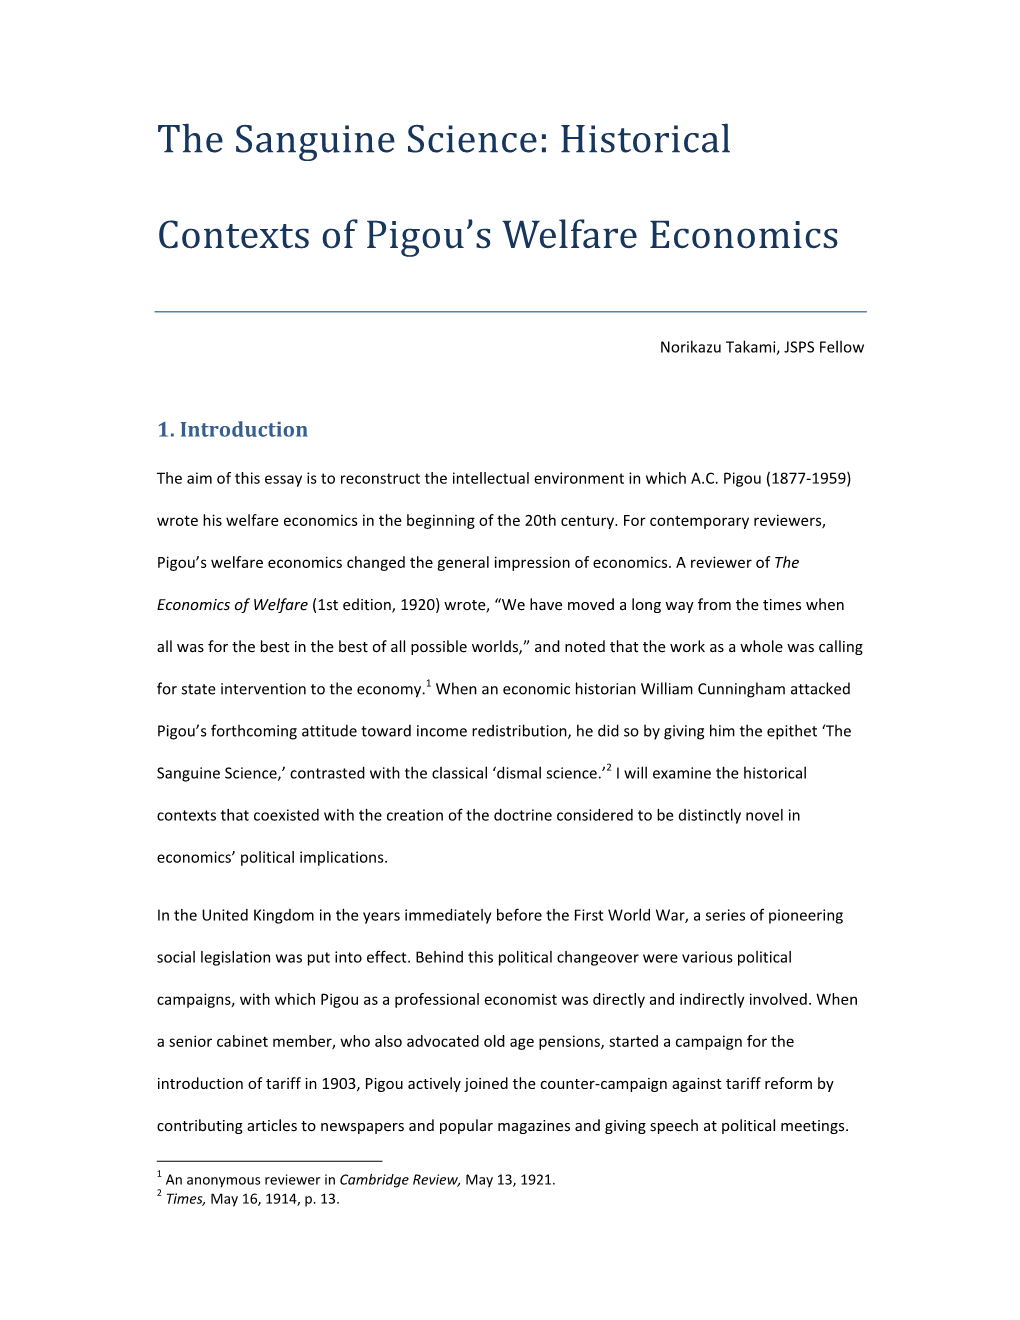 Historical Contexts of Pigou's Welfare Economics